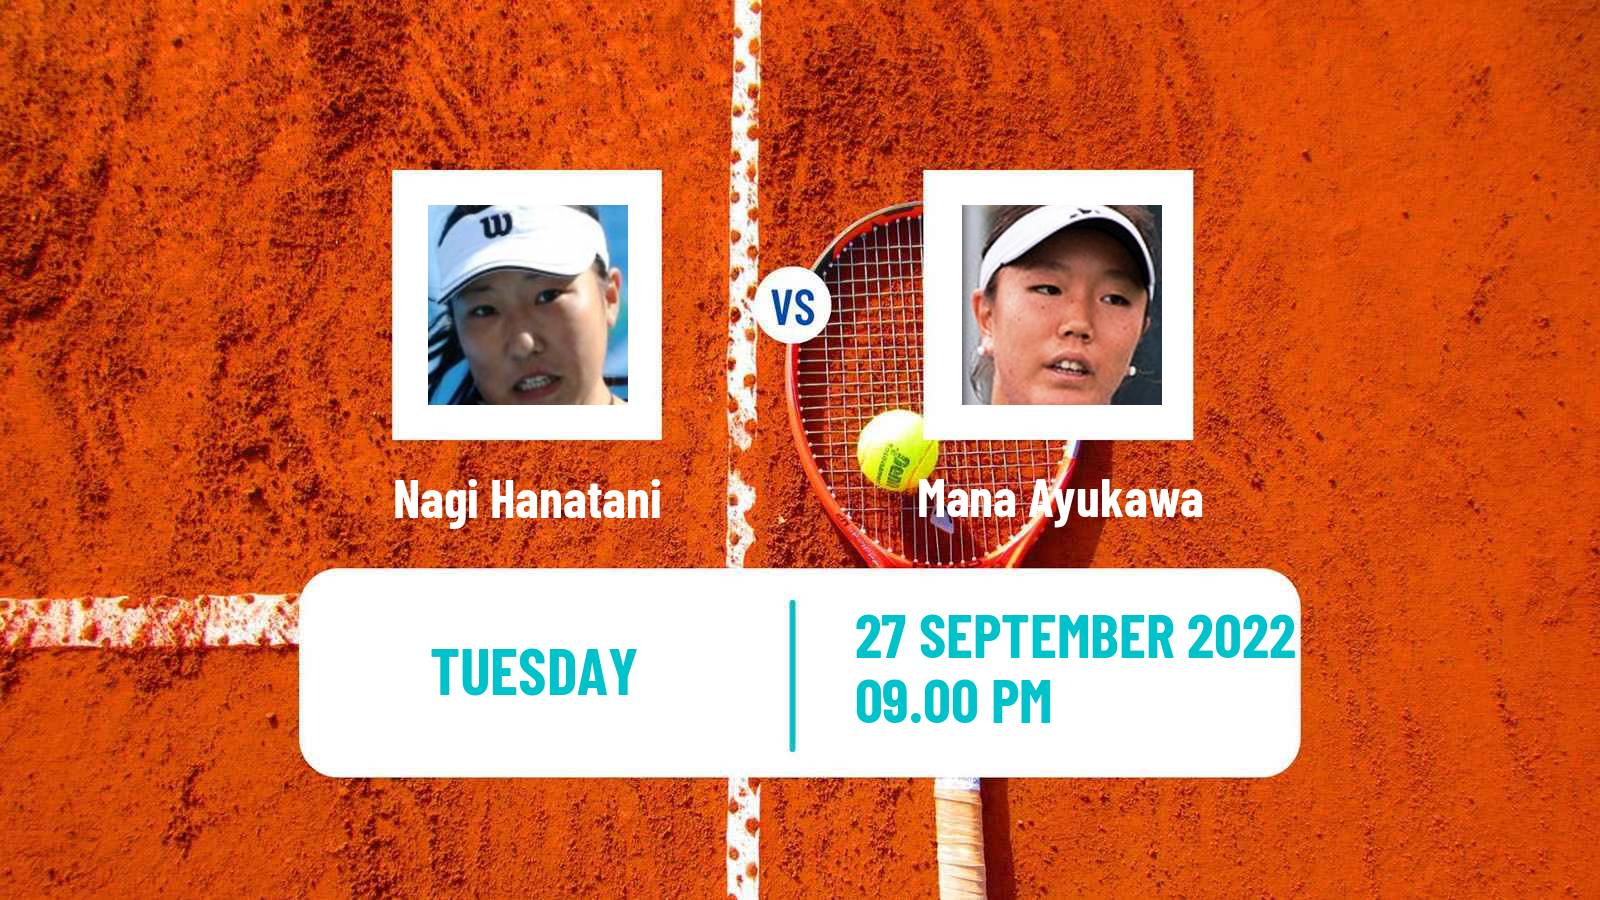 Tennis ITF Tournaments Nagi Hanatani - Mana Ayukawa